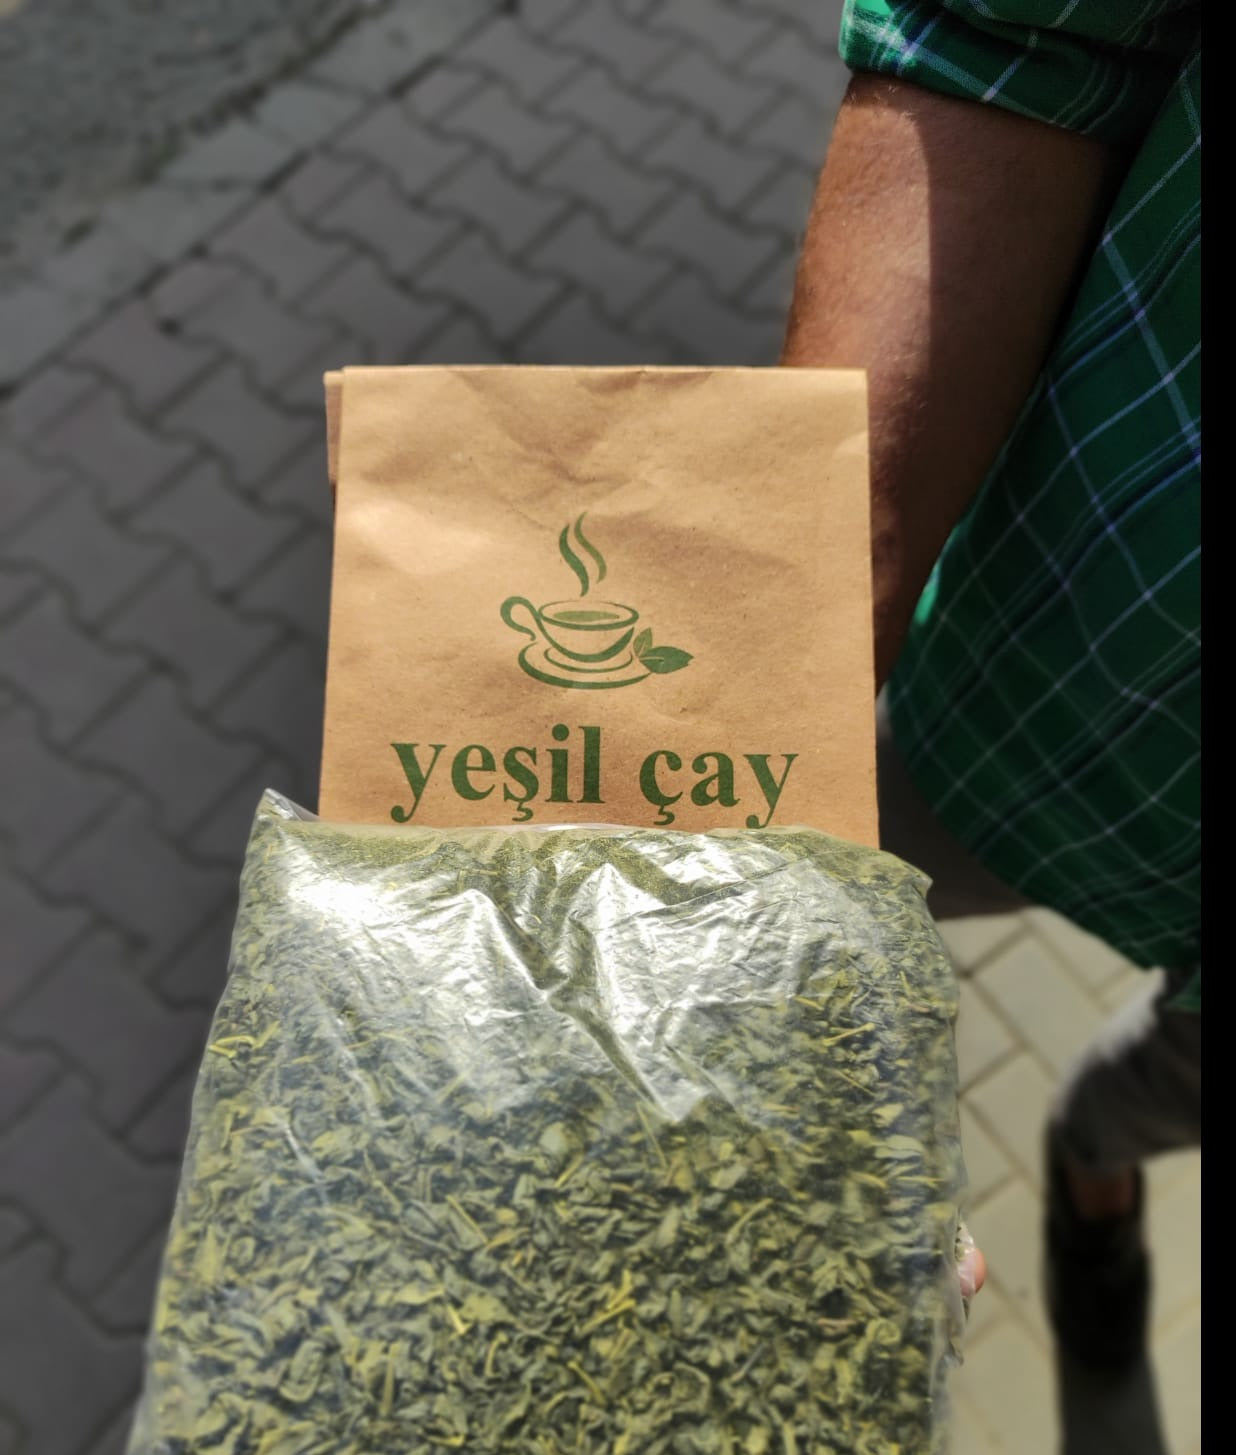 GREEN TEA (YESIL CAY)